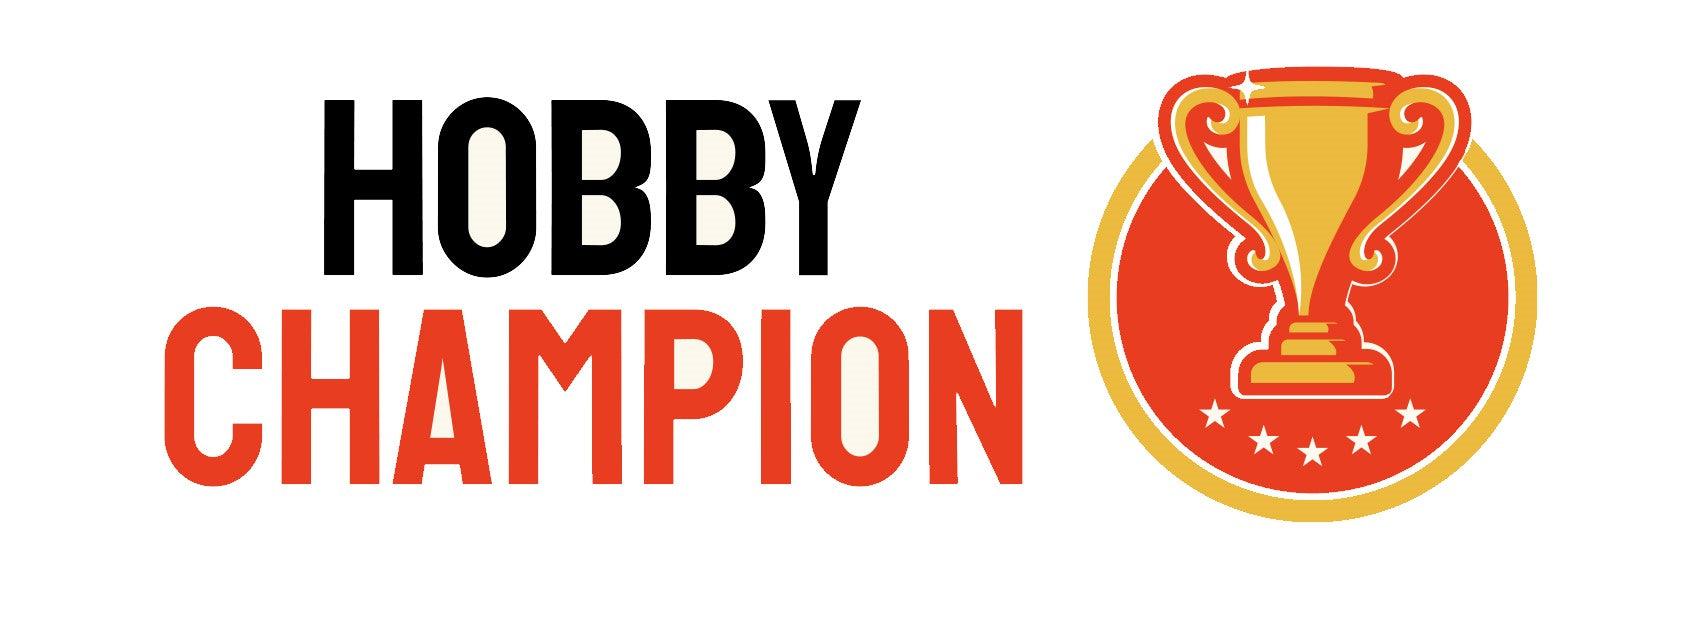 Hobby Champion Gift Card - Hobby Champion Inc